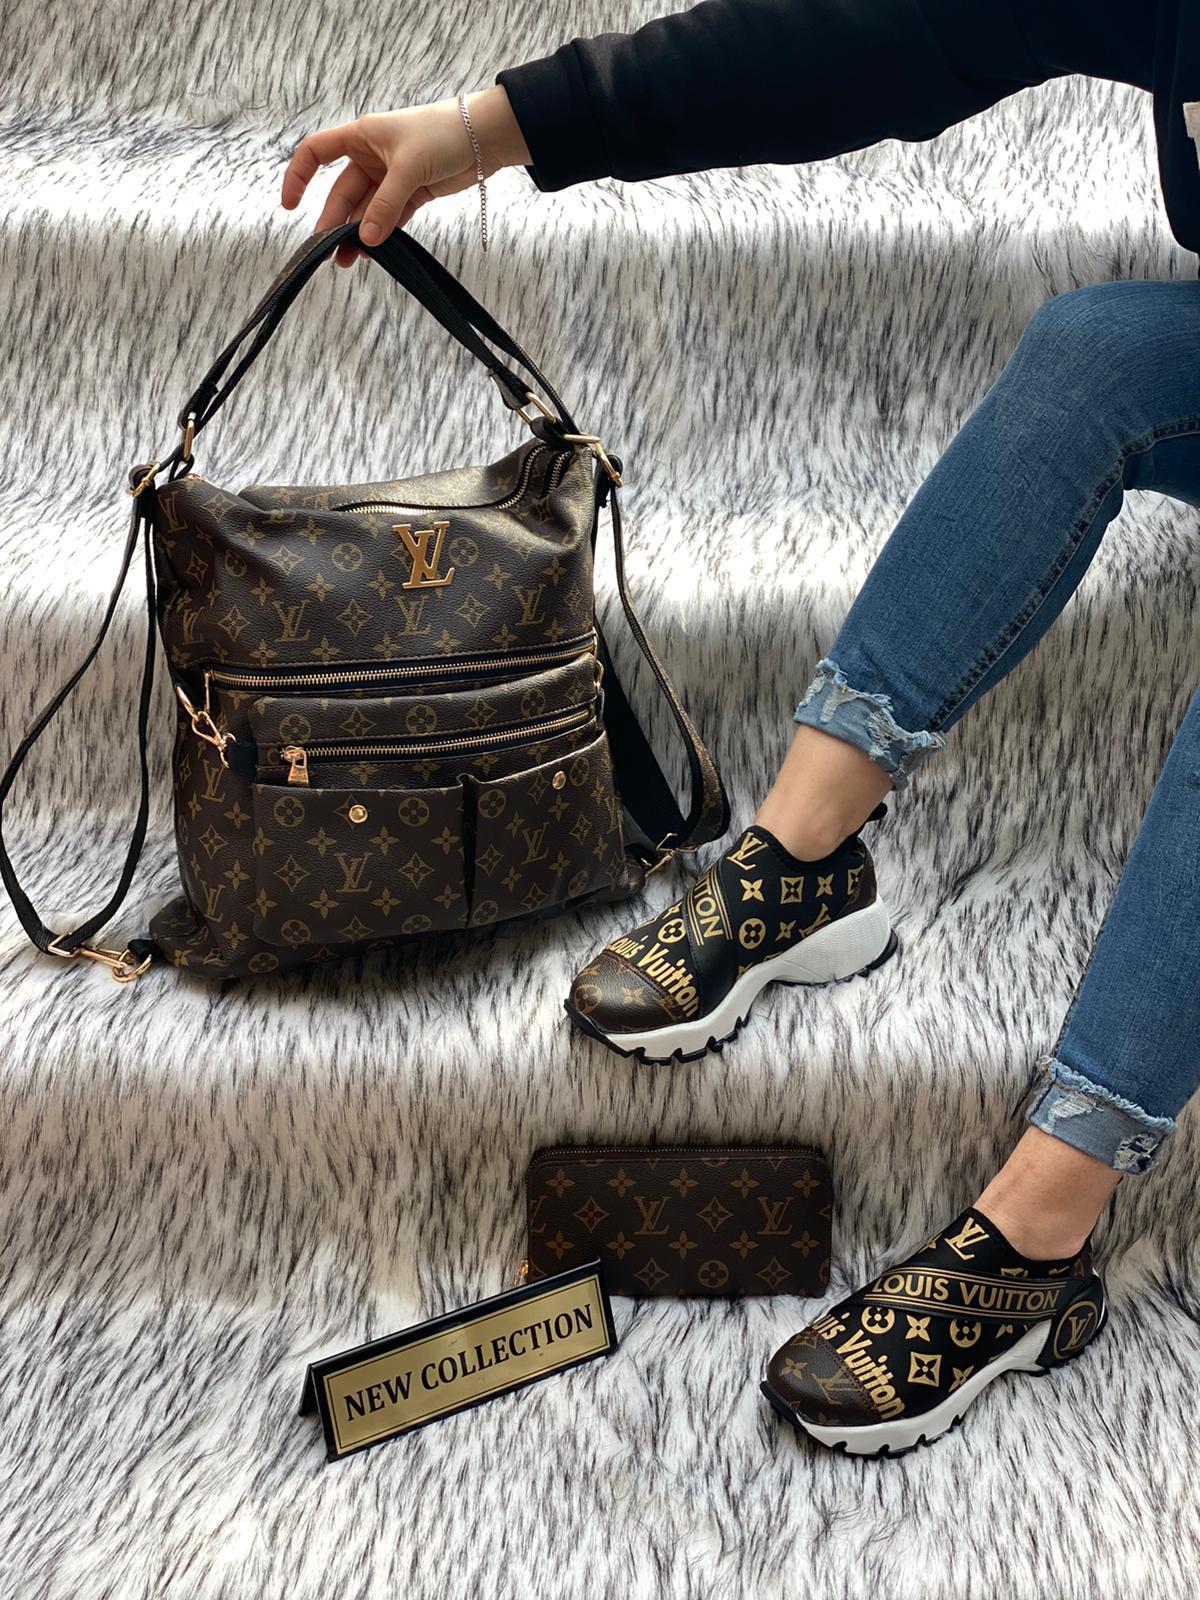 Louis Vuitton Backbag Set